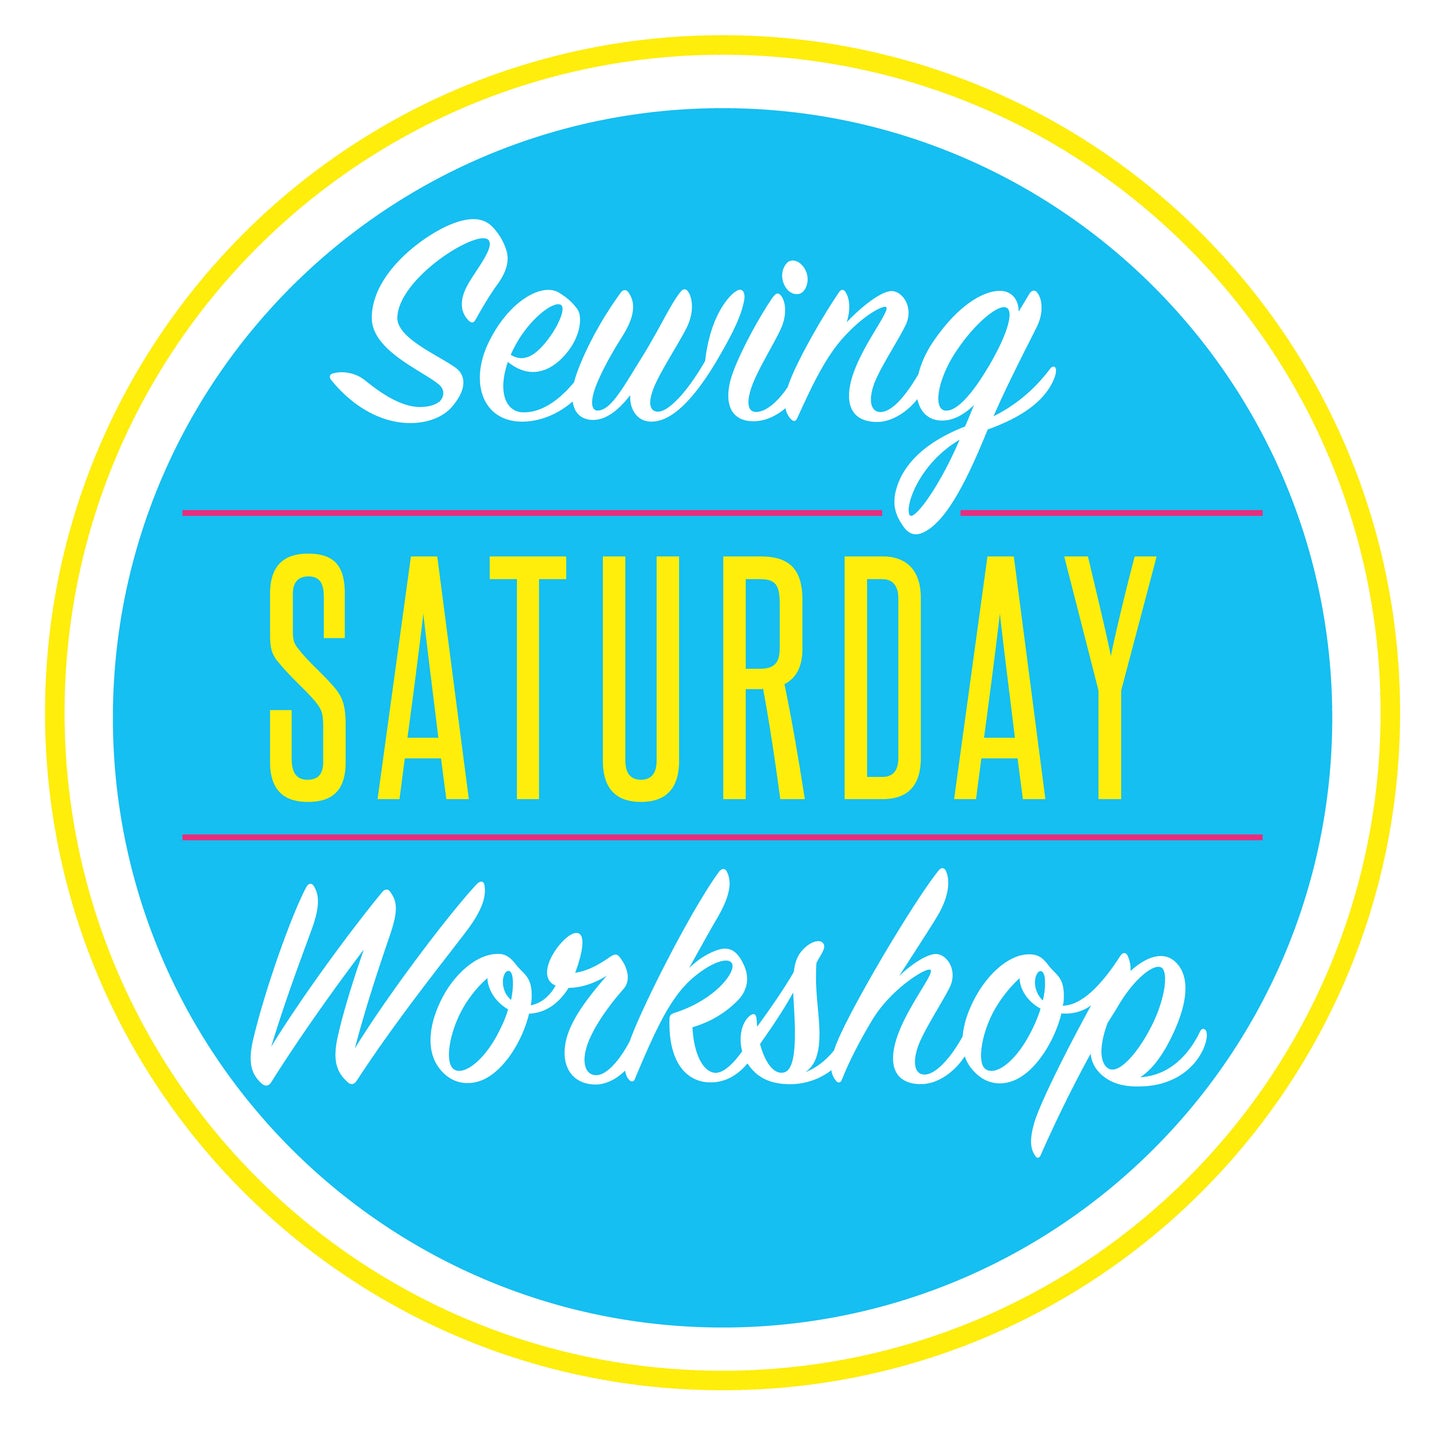 Sewing Workshop: Saturday, May 25, 9am-3pm